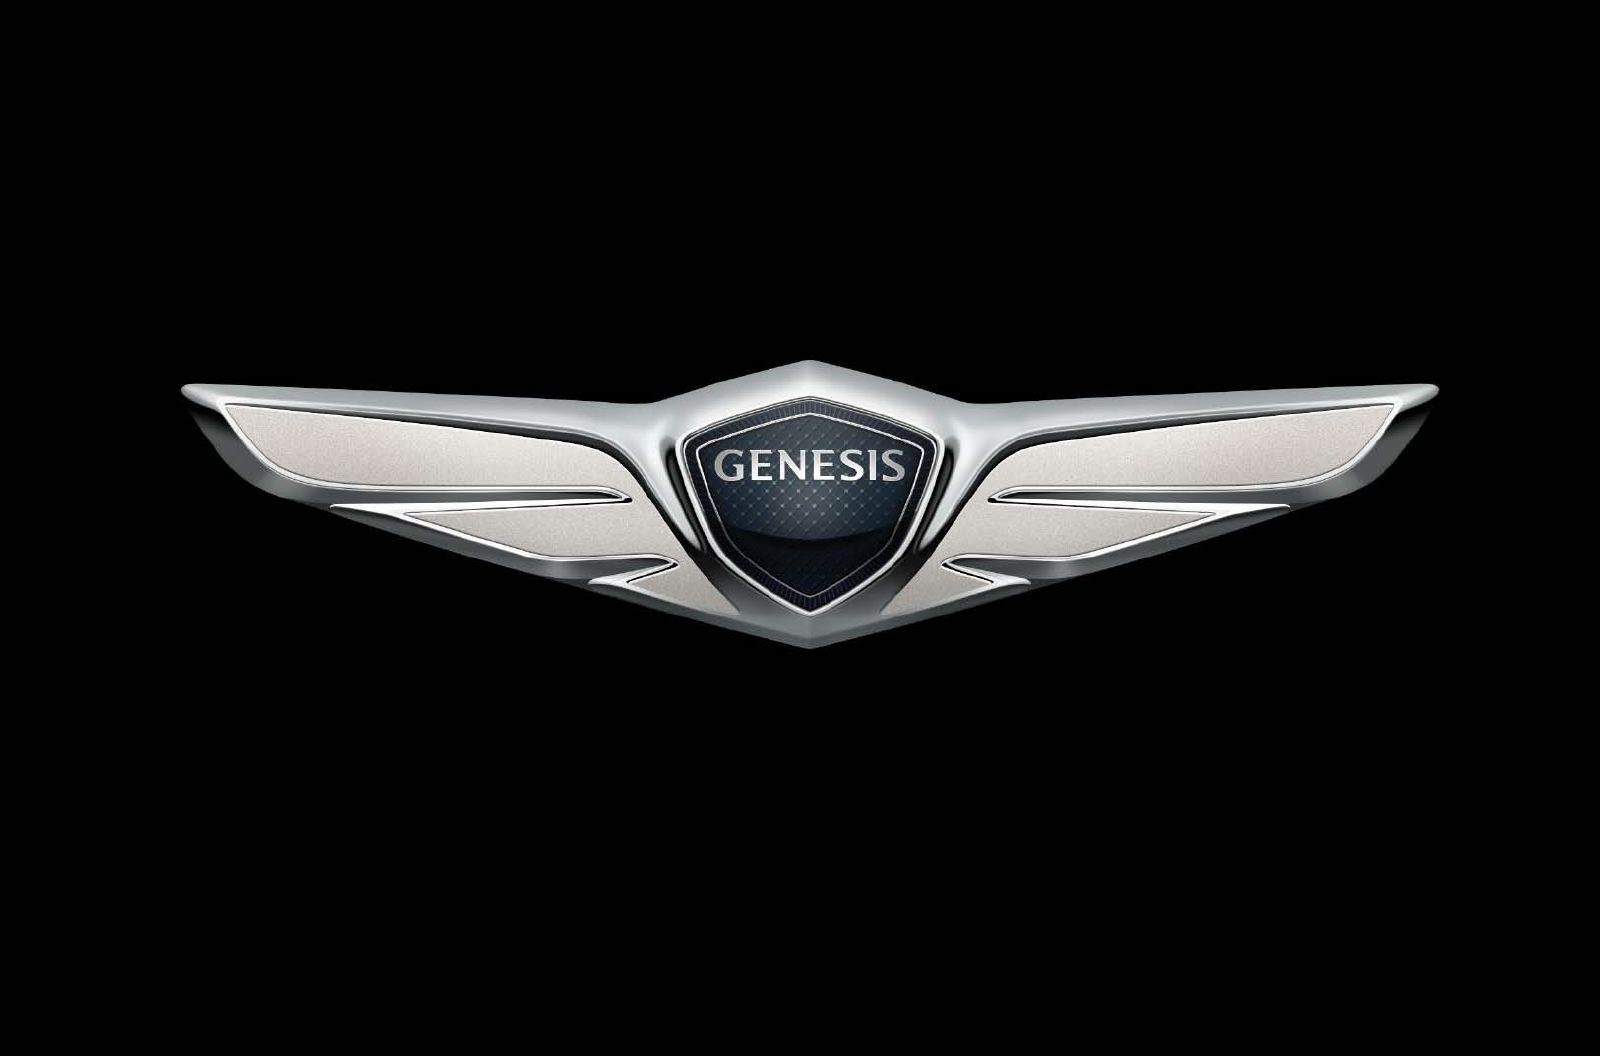 Hyundai Launches Genesis Luxury Brand, Announces Luc Donckerwolke's Appointment